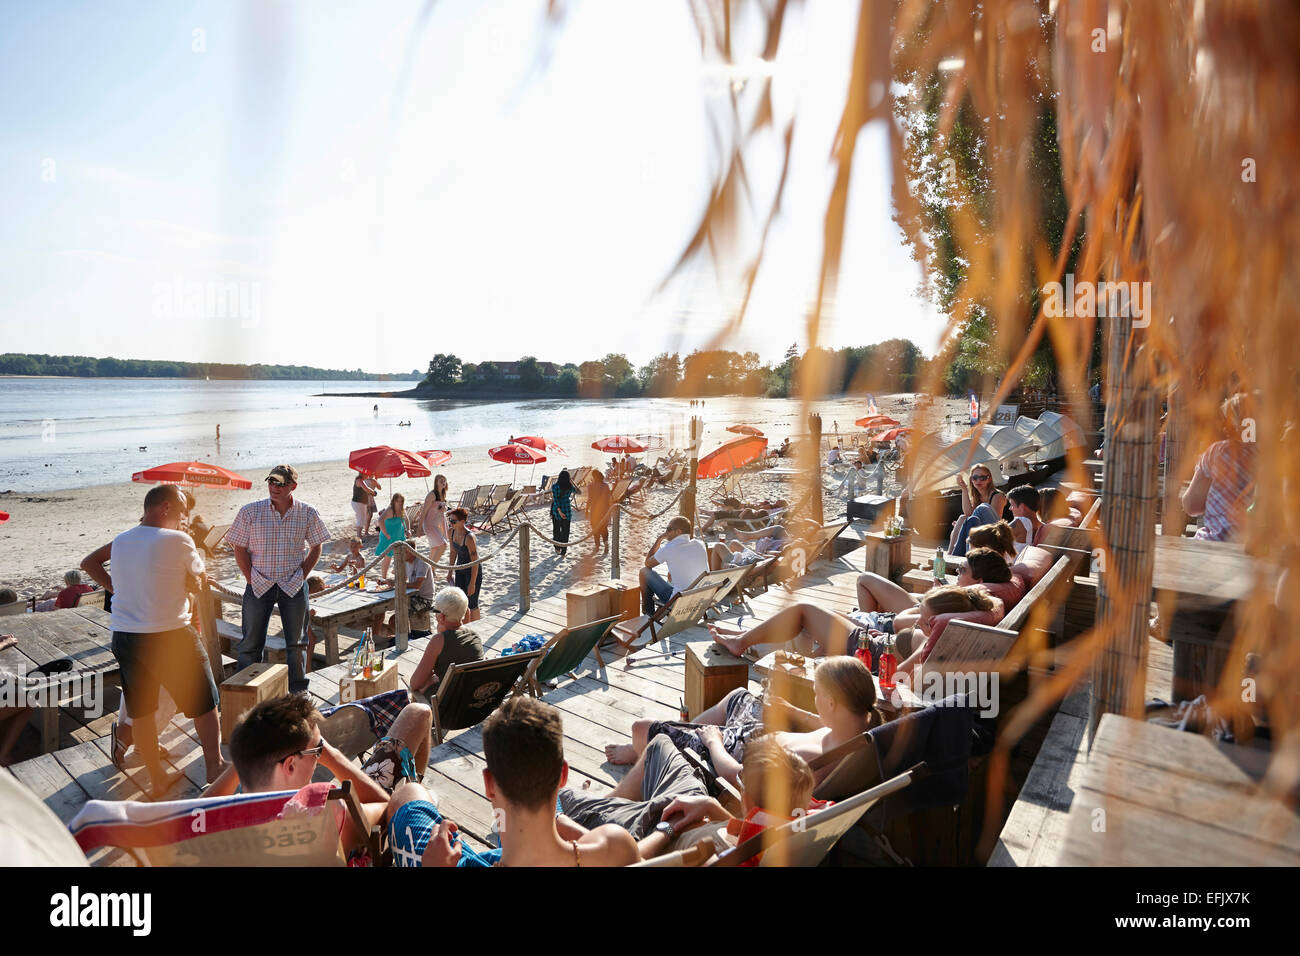 28 grad, Beach Club Wedel, Elbe river beach, northern Hamburg, Germany Stock Photo